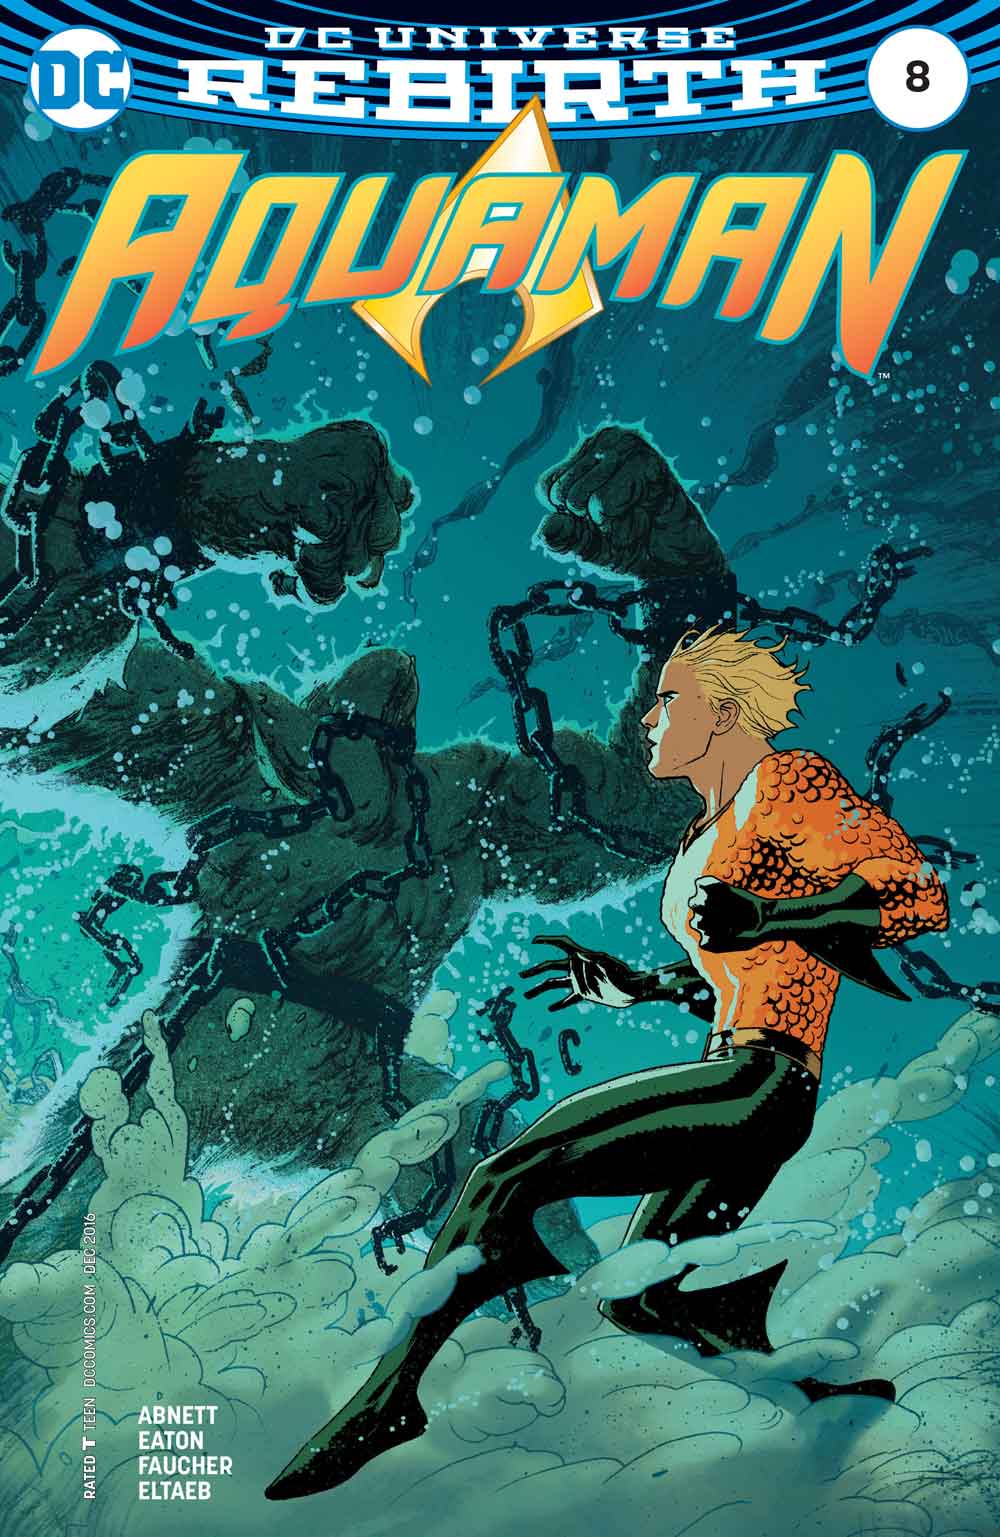 Aquaman #8 Variant cover by Joshua Middleton